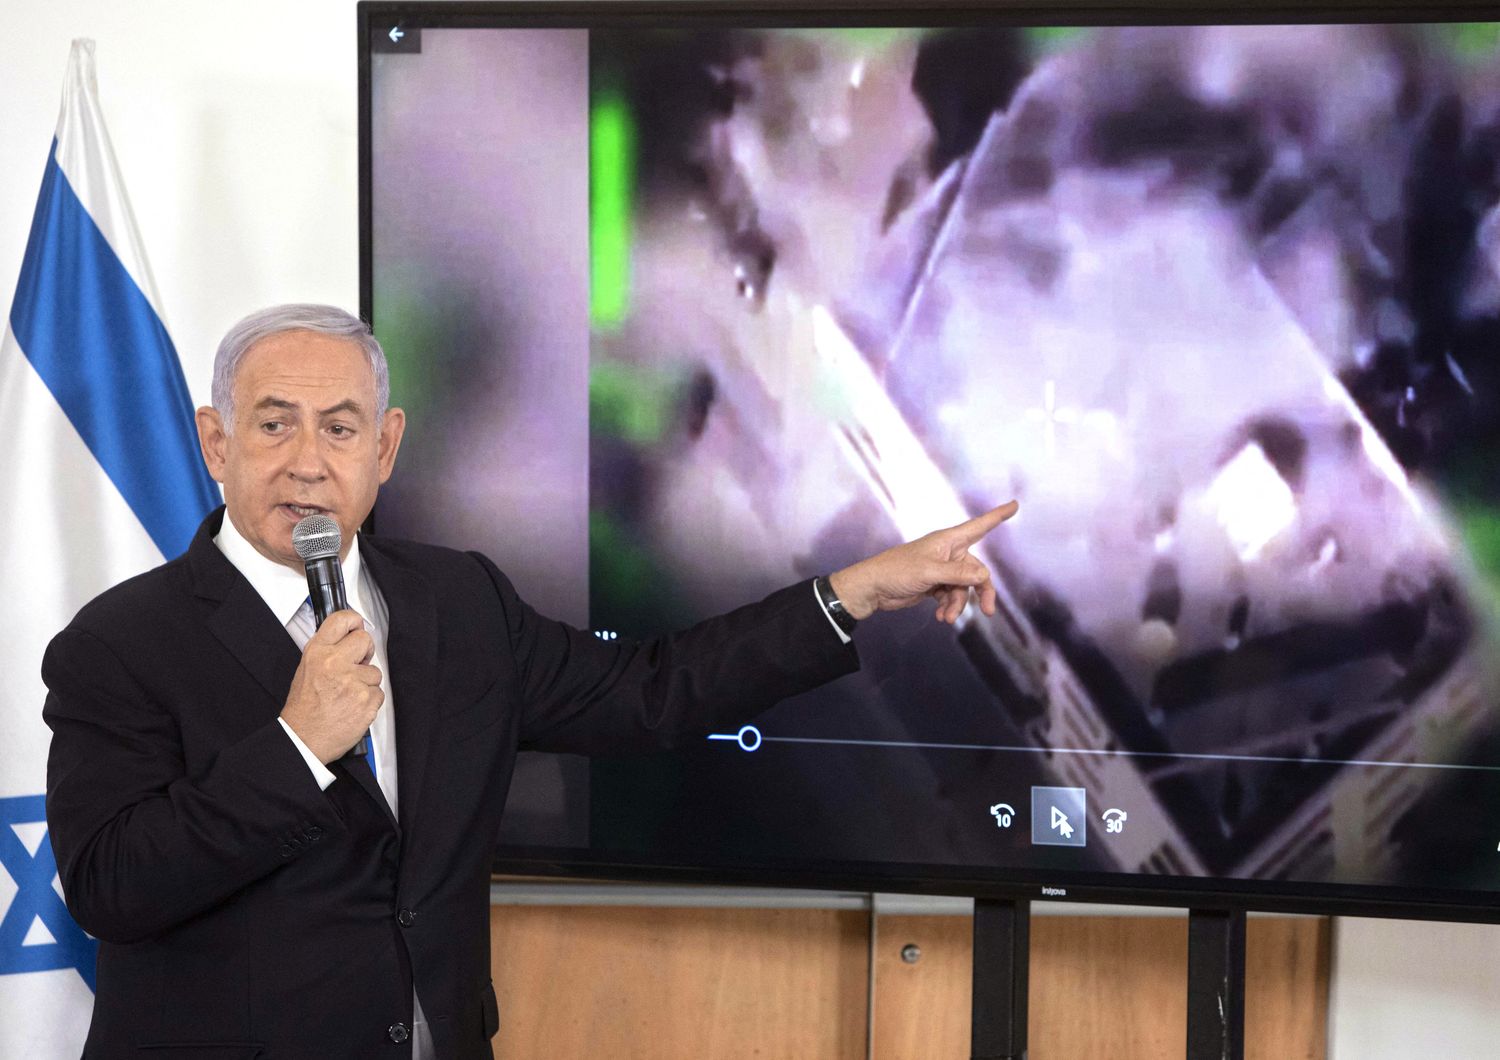 Il premier israeliano Benjamin Netanyahu illustra gli effetti dei raid su Gaza